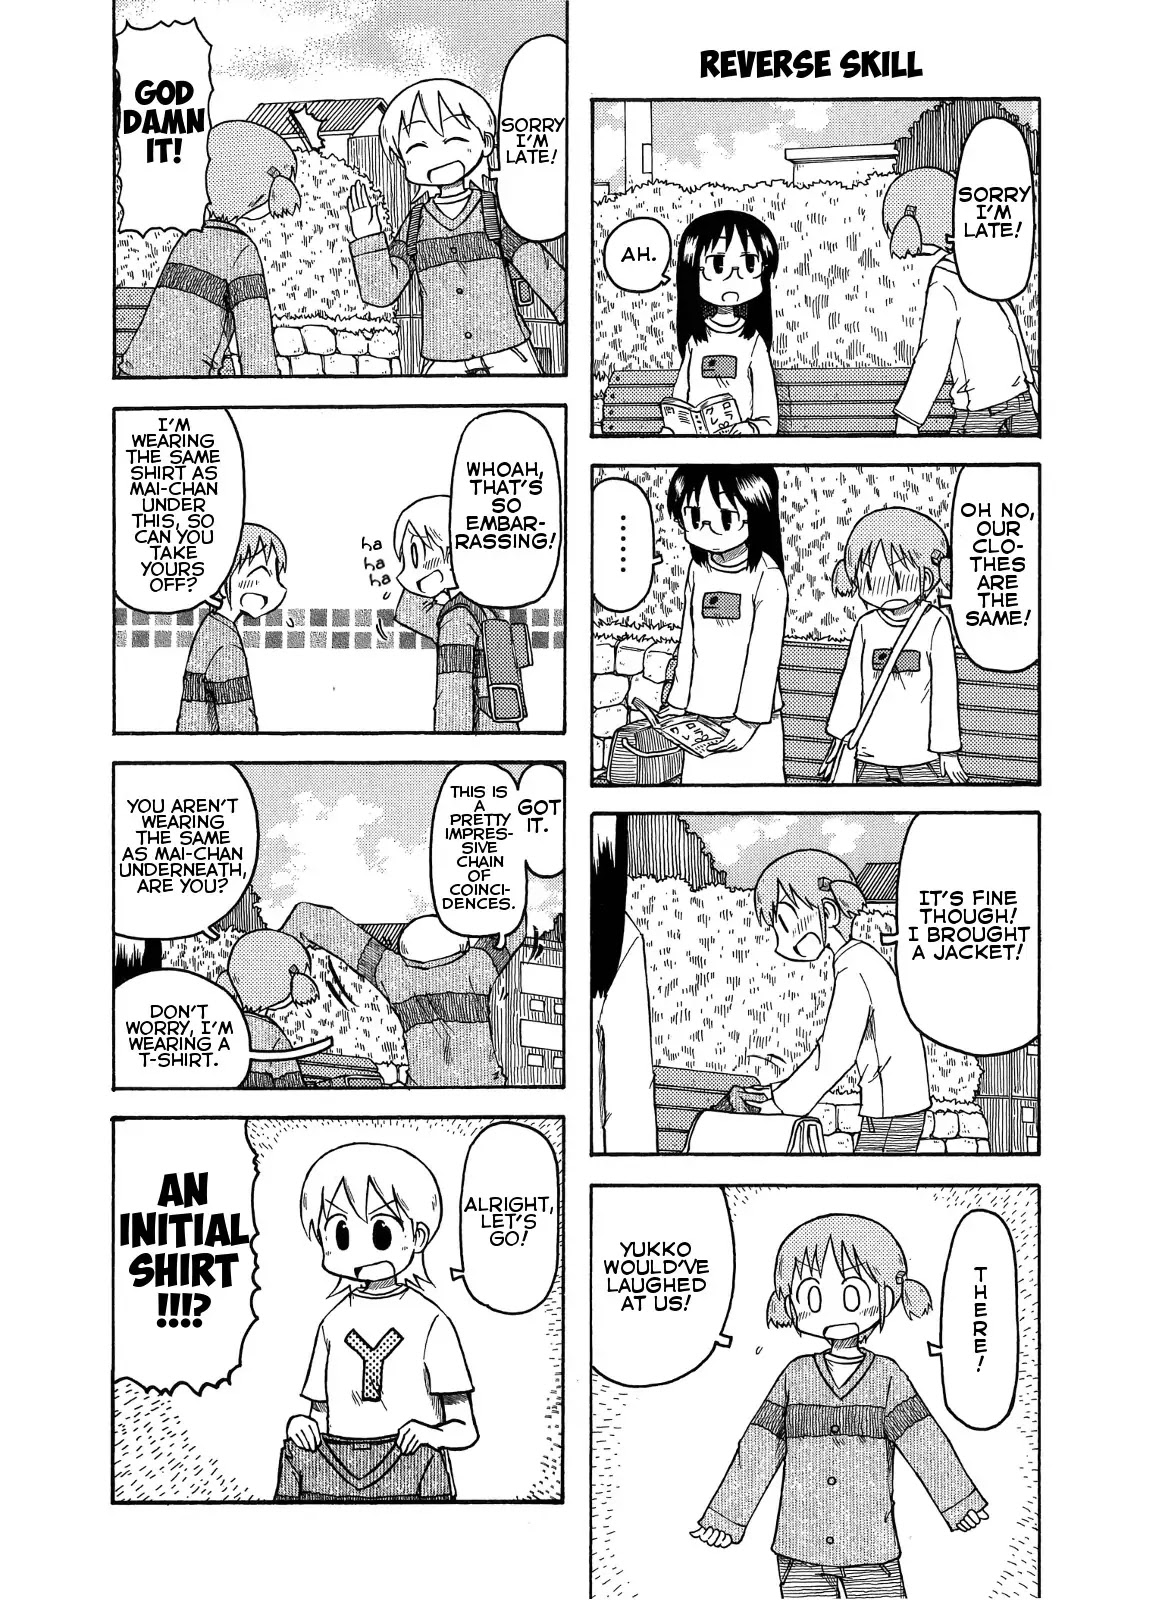 Nichijou - Page 2